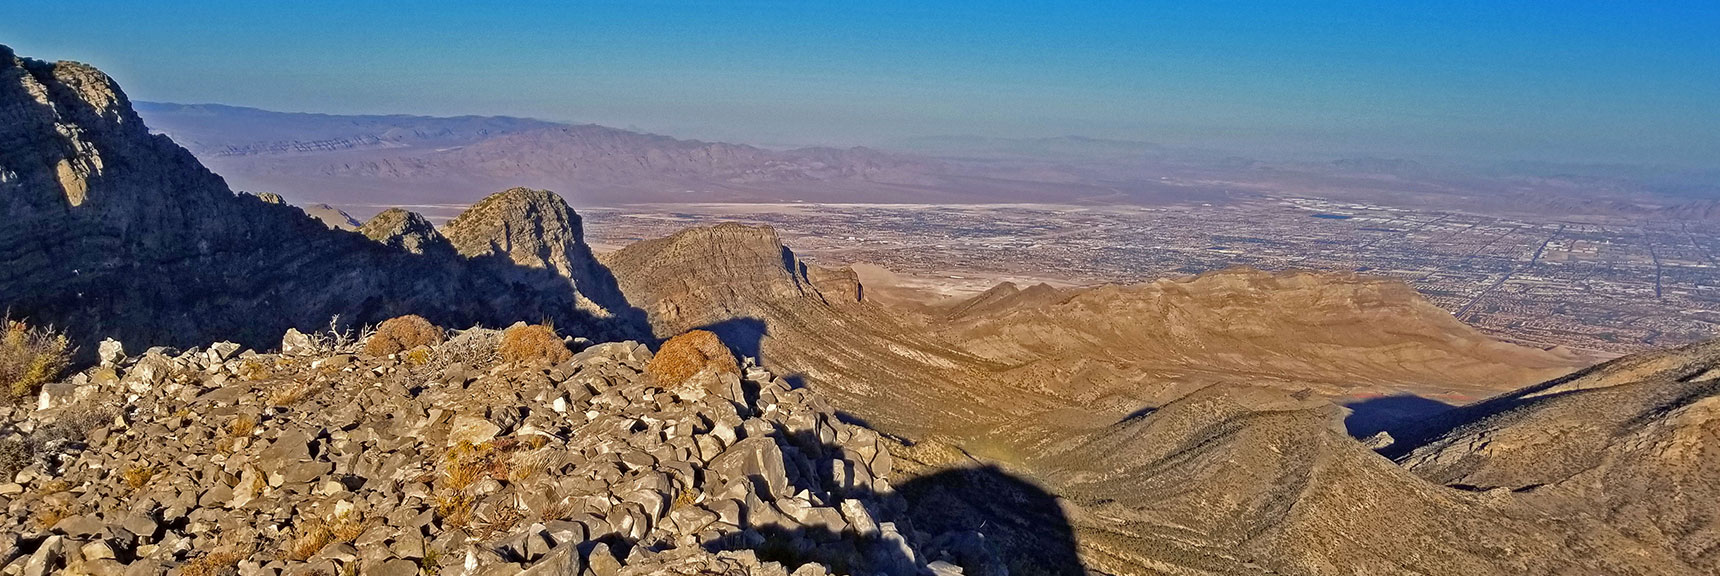 Centennial Hills and Gass Peak from El Padre Mt Approach Ridge | La Madre Mountain,, El Padre Mountain, Burnt Peak | La Madre Mountains Wilderness, Nevada